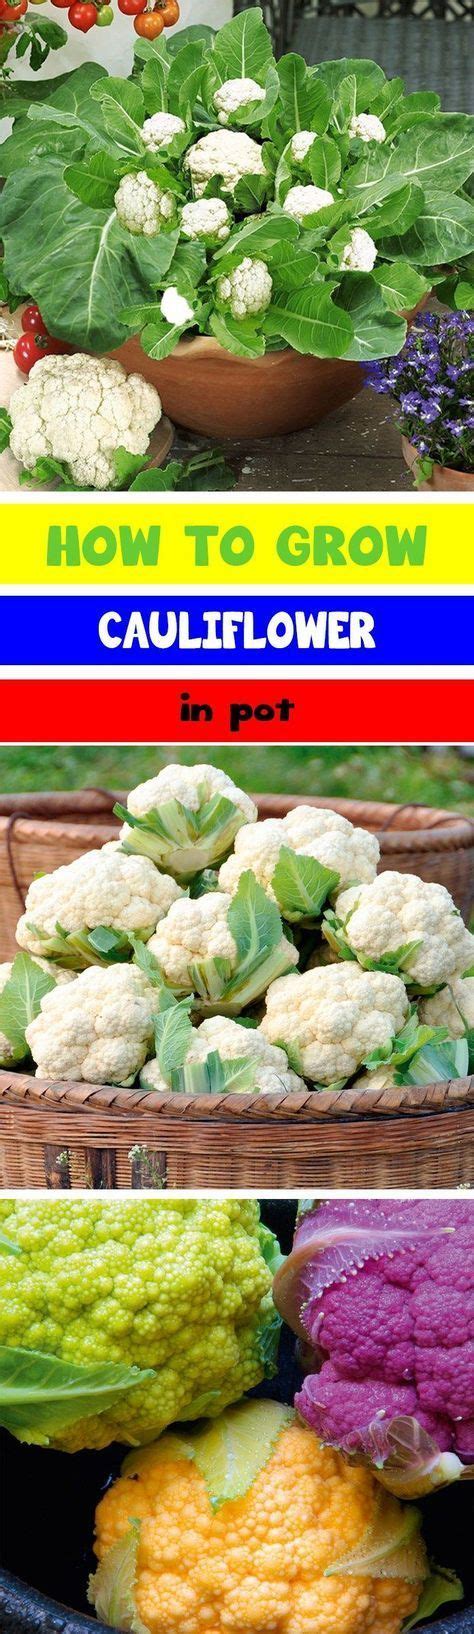 Growing Cauliflower In Containers Growing Cauliflower Indoor